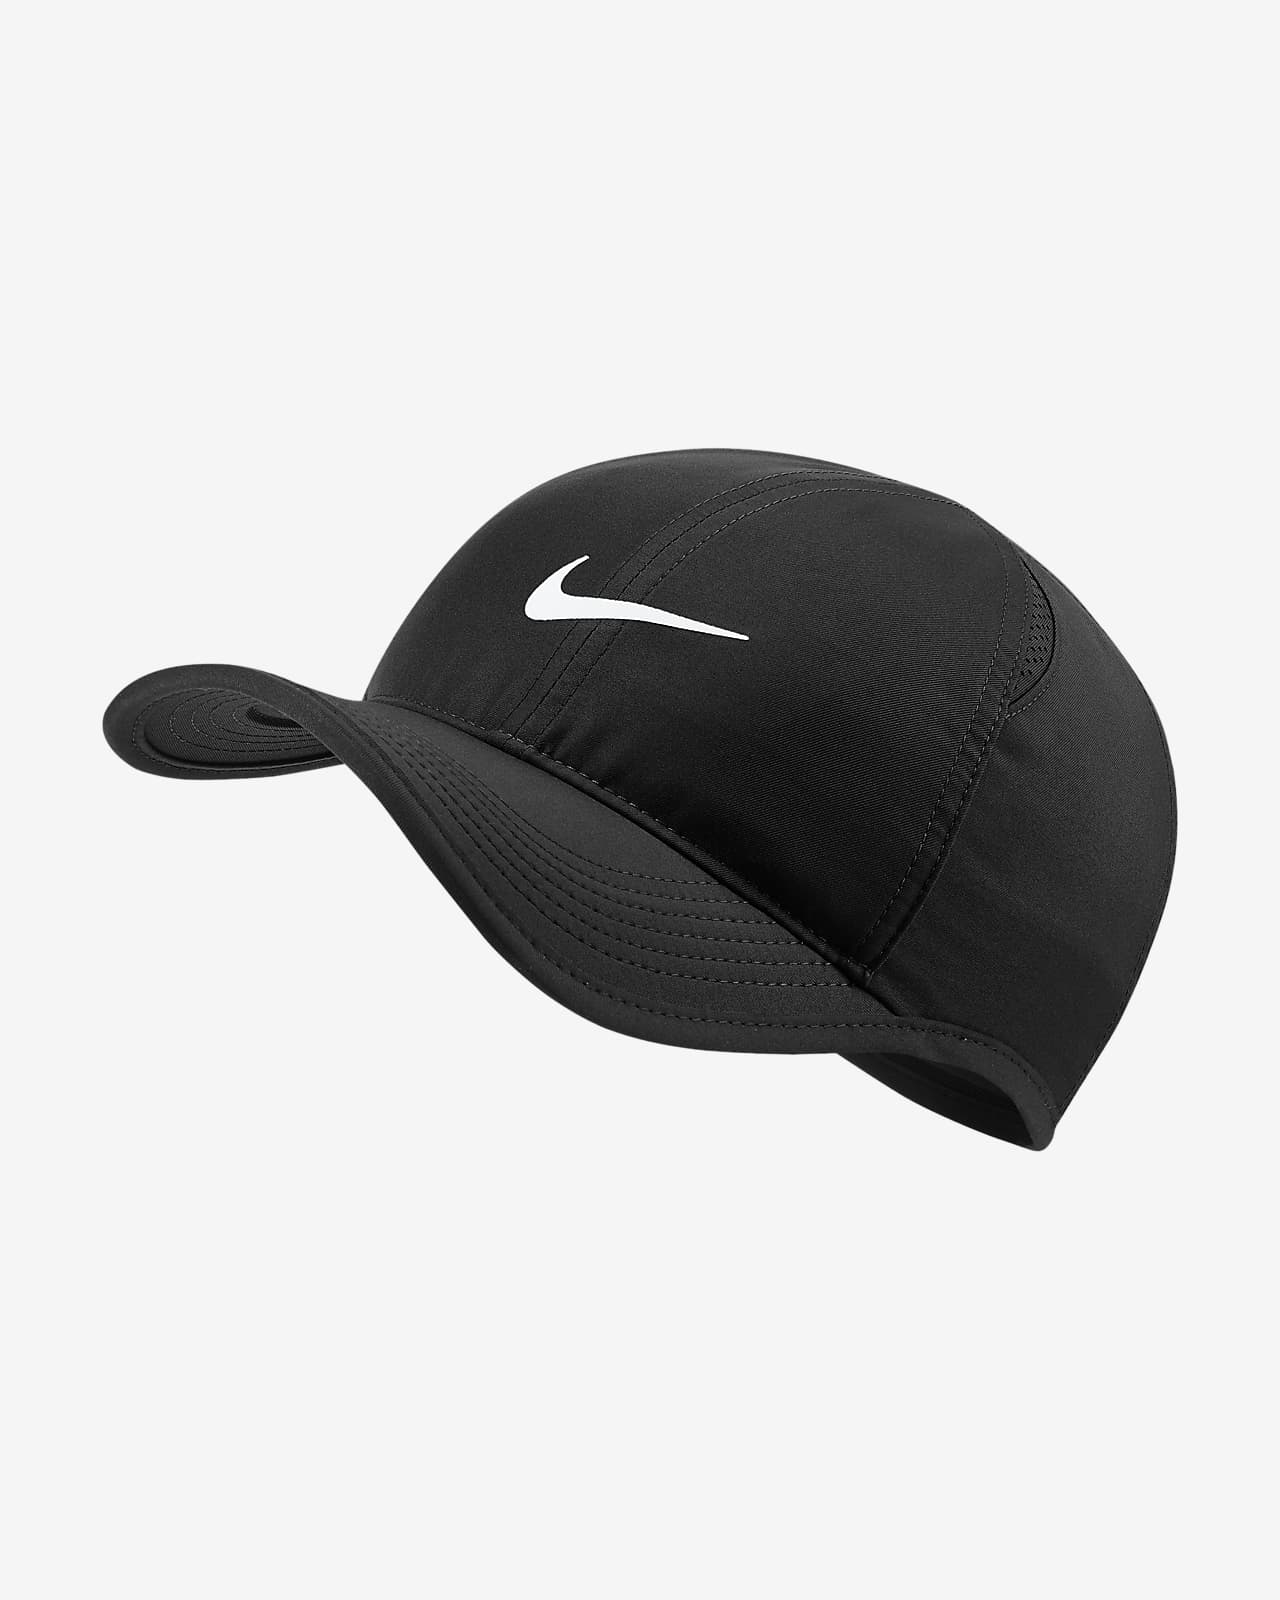 Nike Sportswear AeroBill Featherlight Adjustable Cap. JP